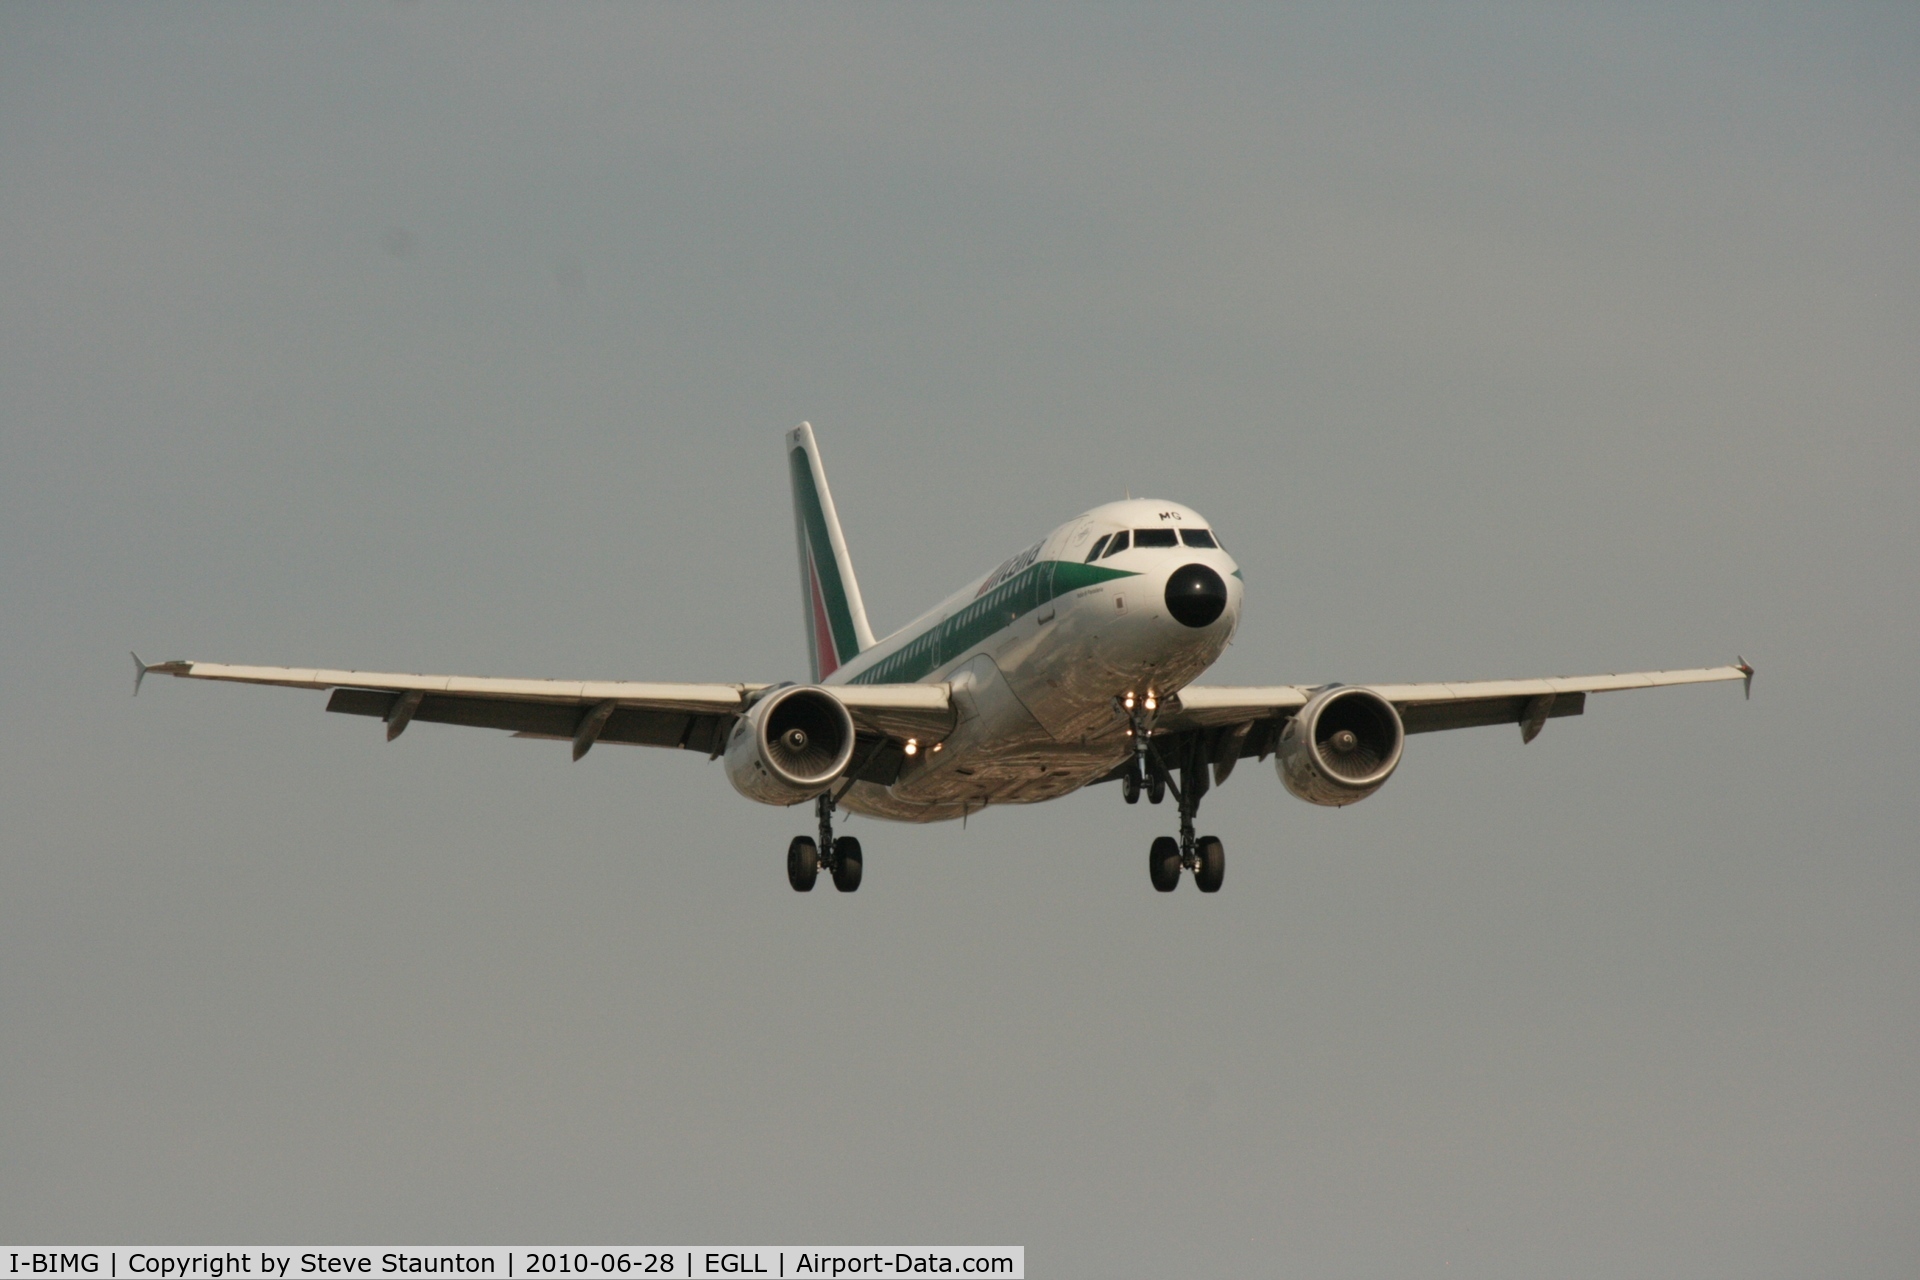 I-BIMG, 2003 Airbus A319-112 C/N 2086, Taken at Heathrow Airport, June 2010